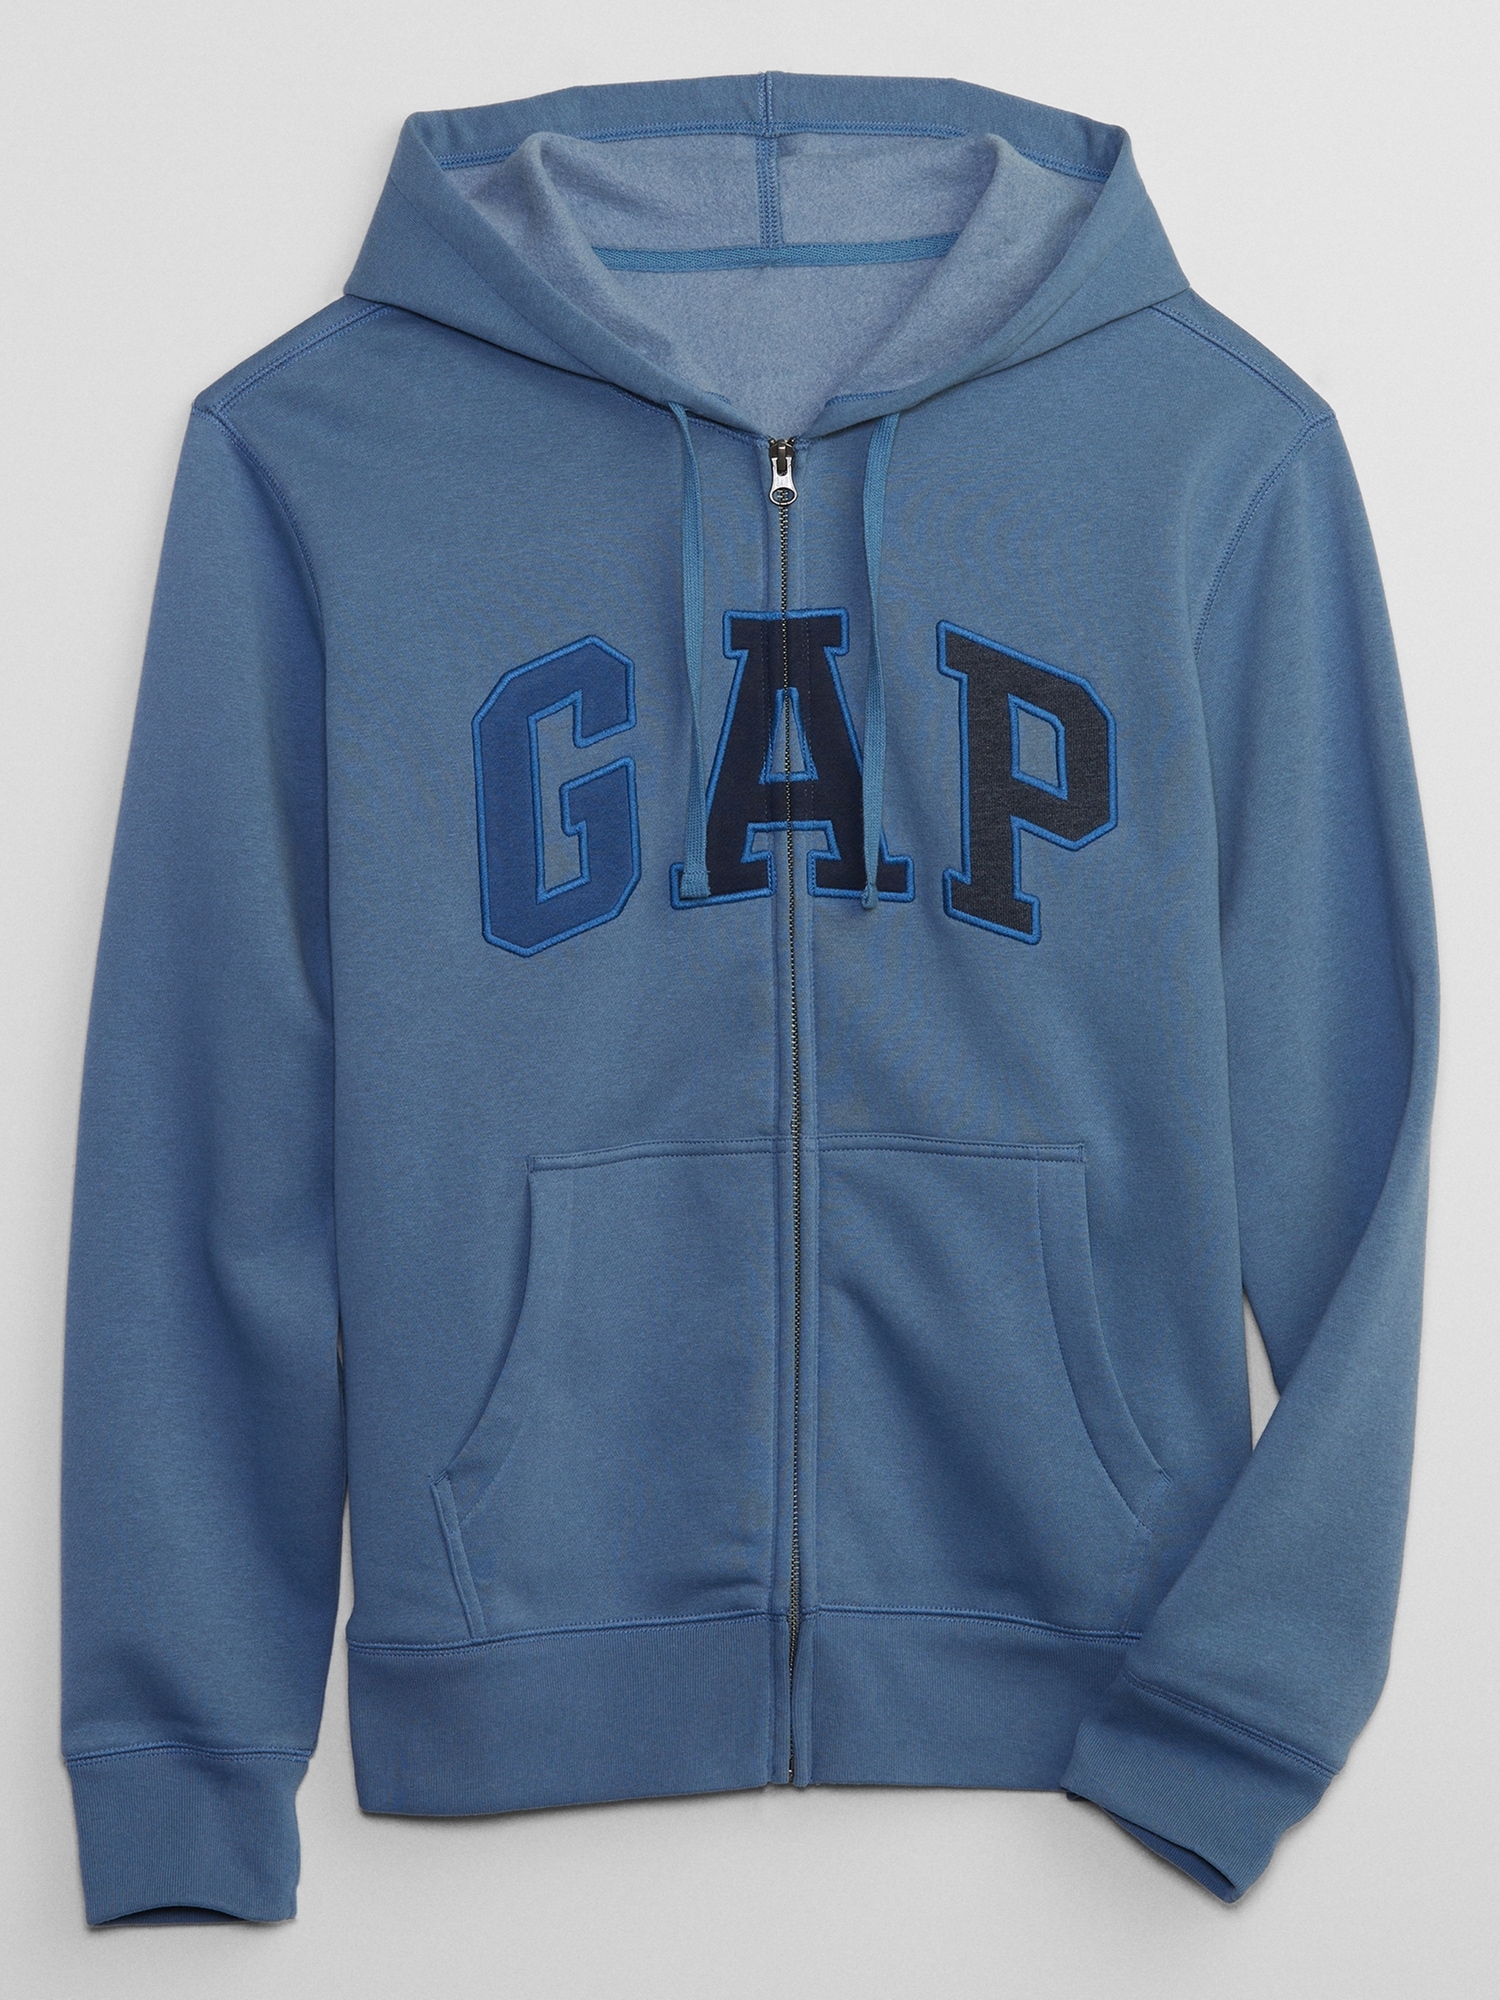 Men's Vintage Soft Zip Hoodie by Gap Tapestry Navy Blue Size Xs